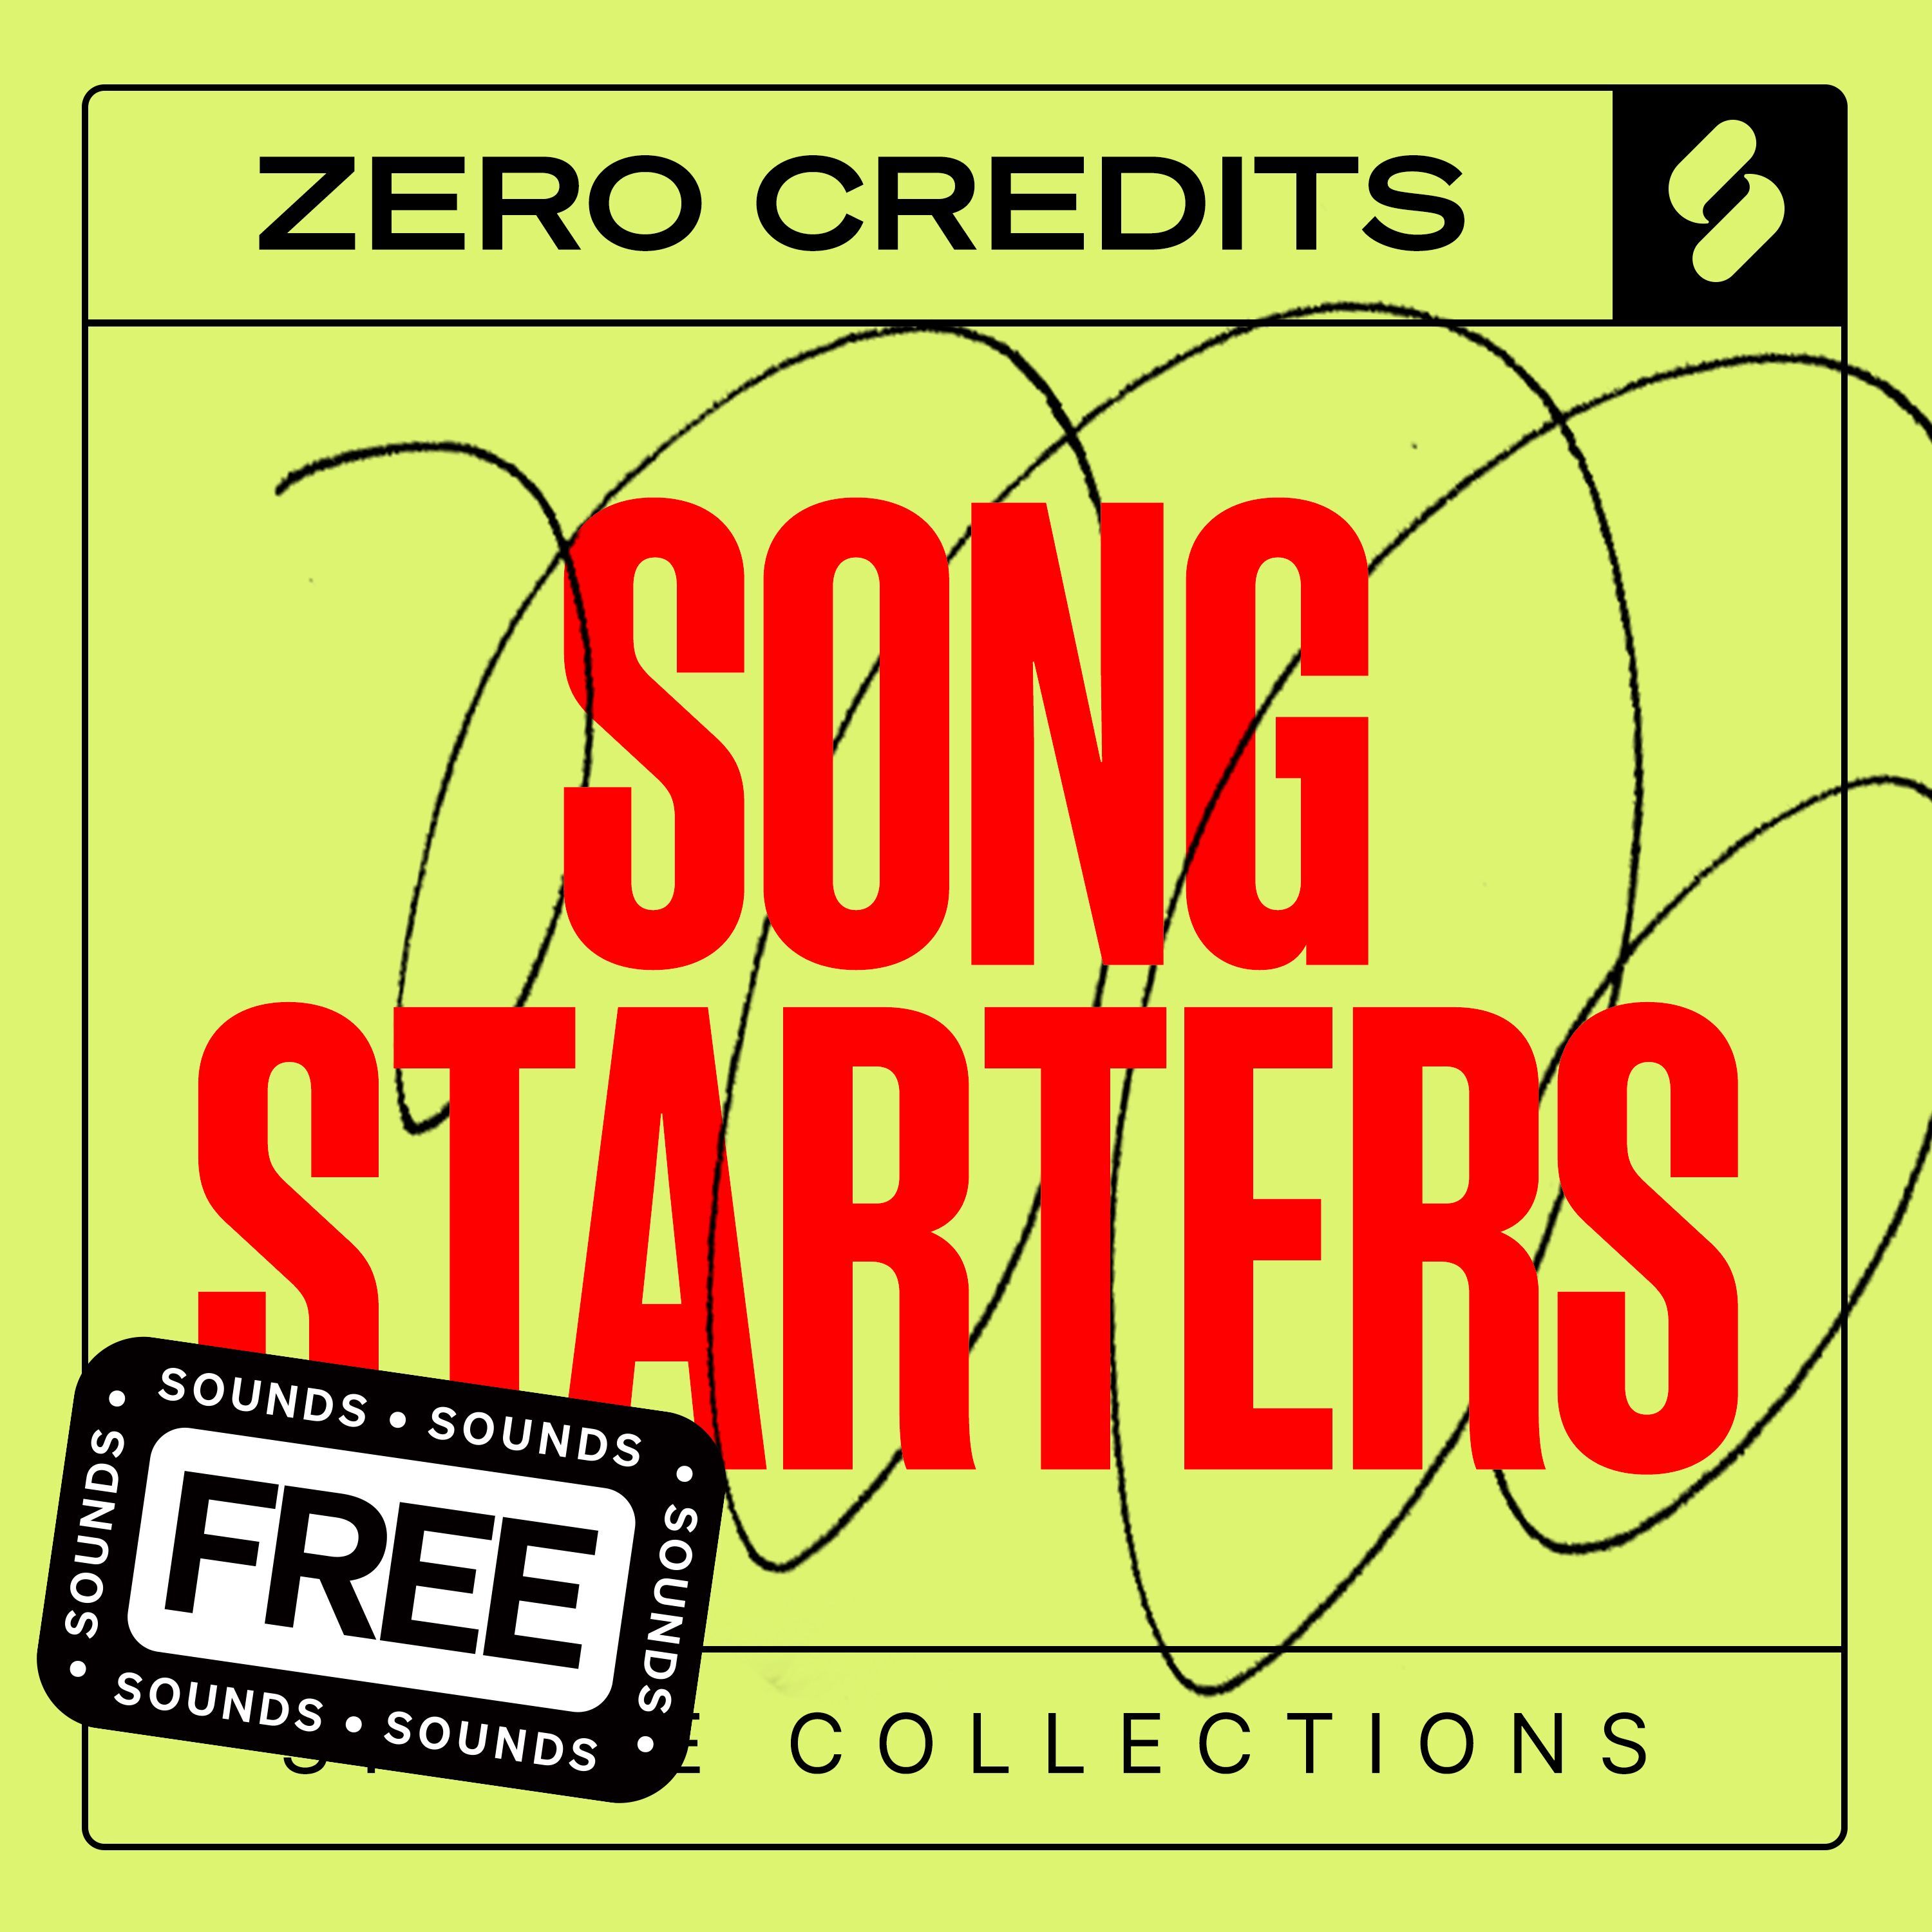 Free Sounds: Songstarters